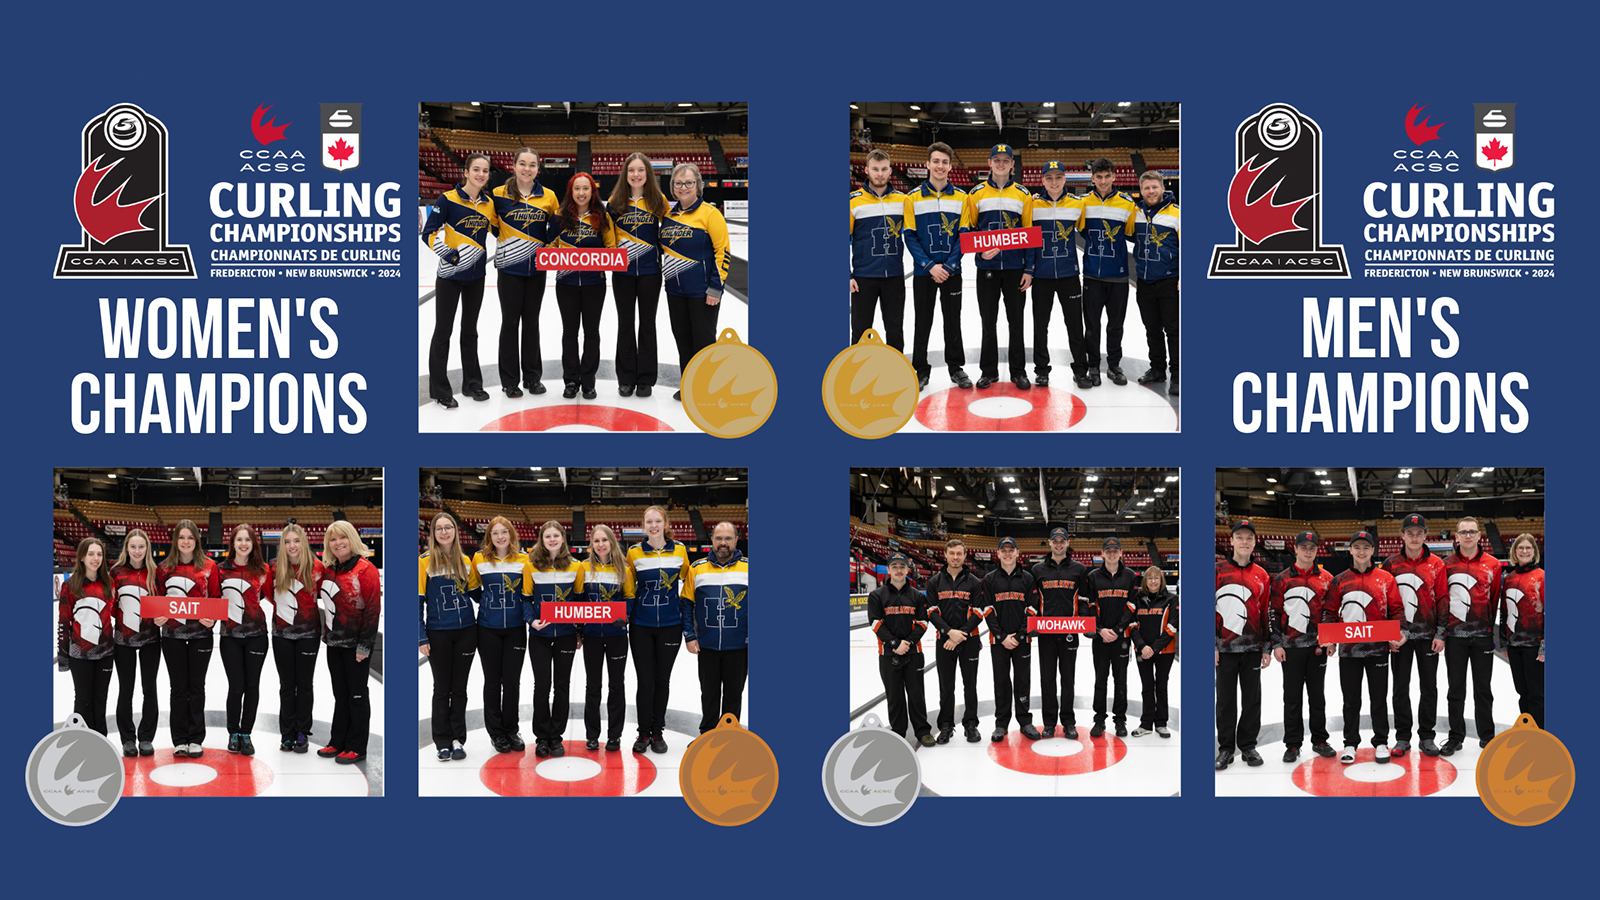 CUE et Humber son champions de curling de l'ACSC